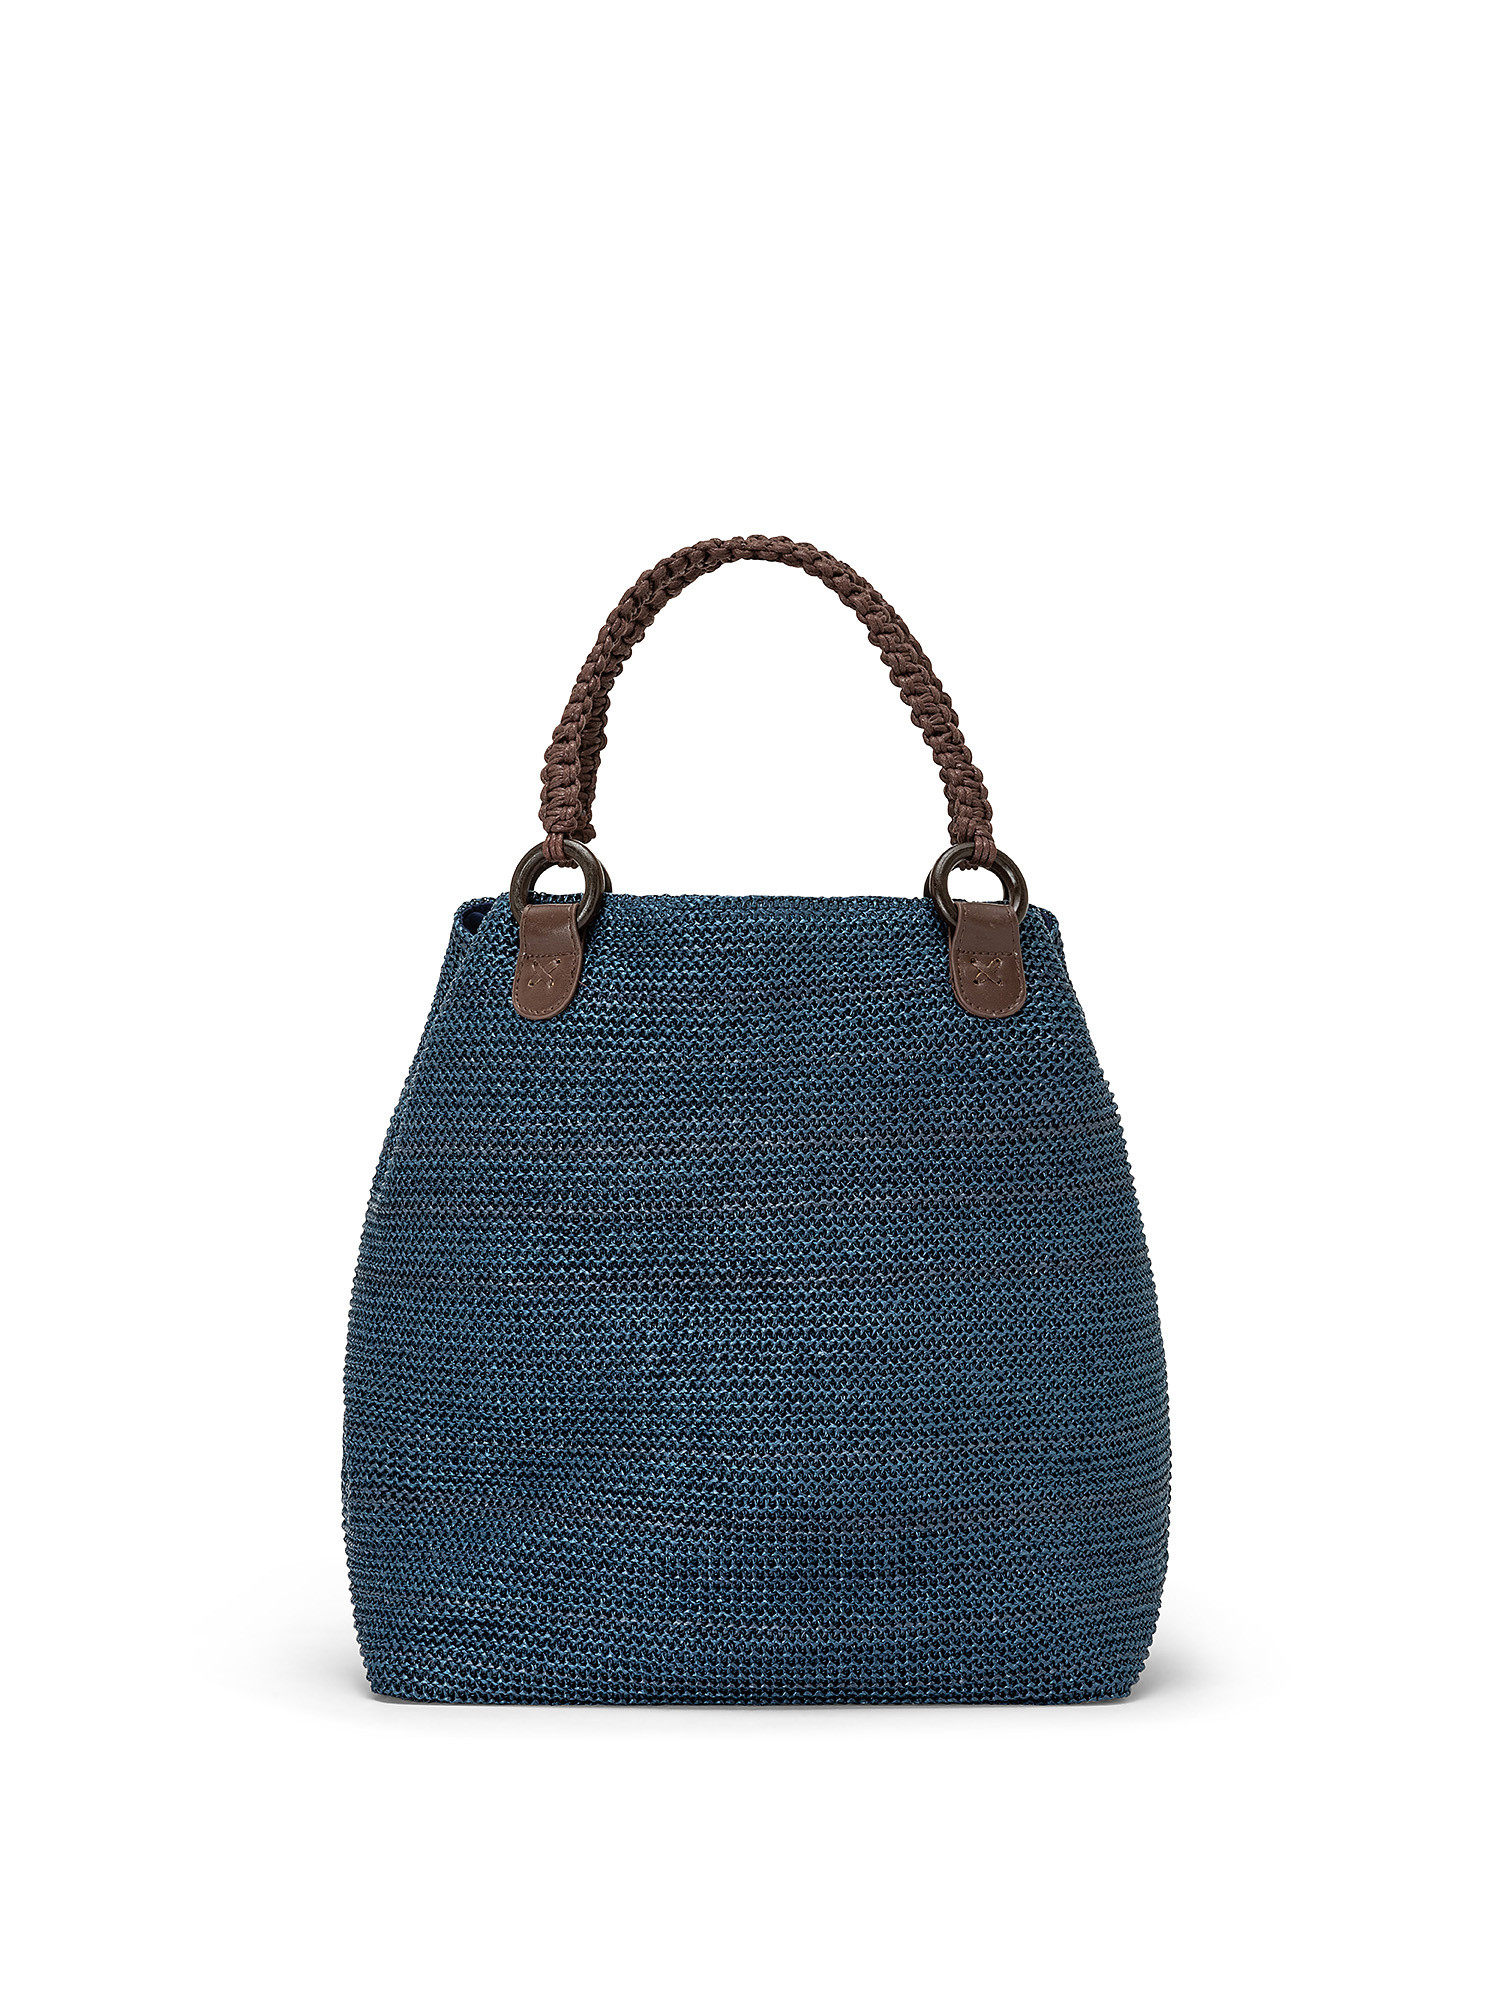 Shopping bag effetto paglia, Blu, large image number 0